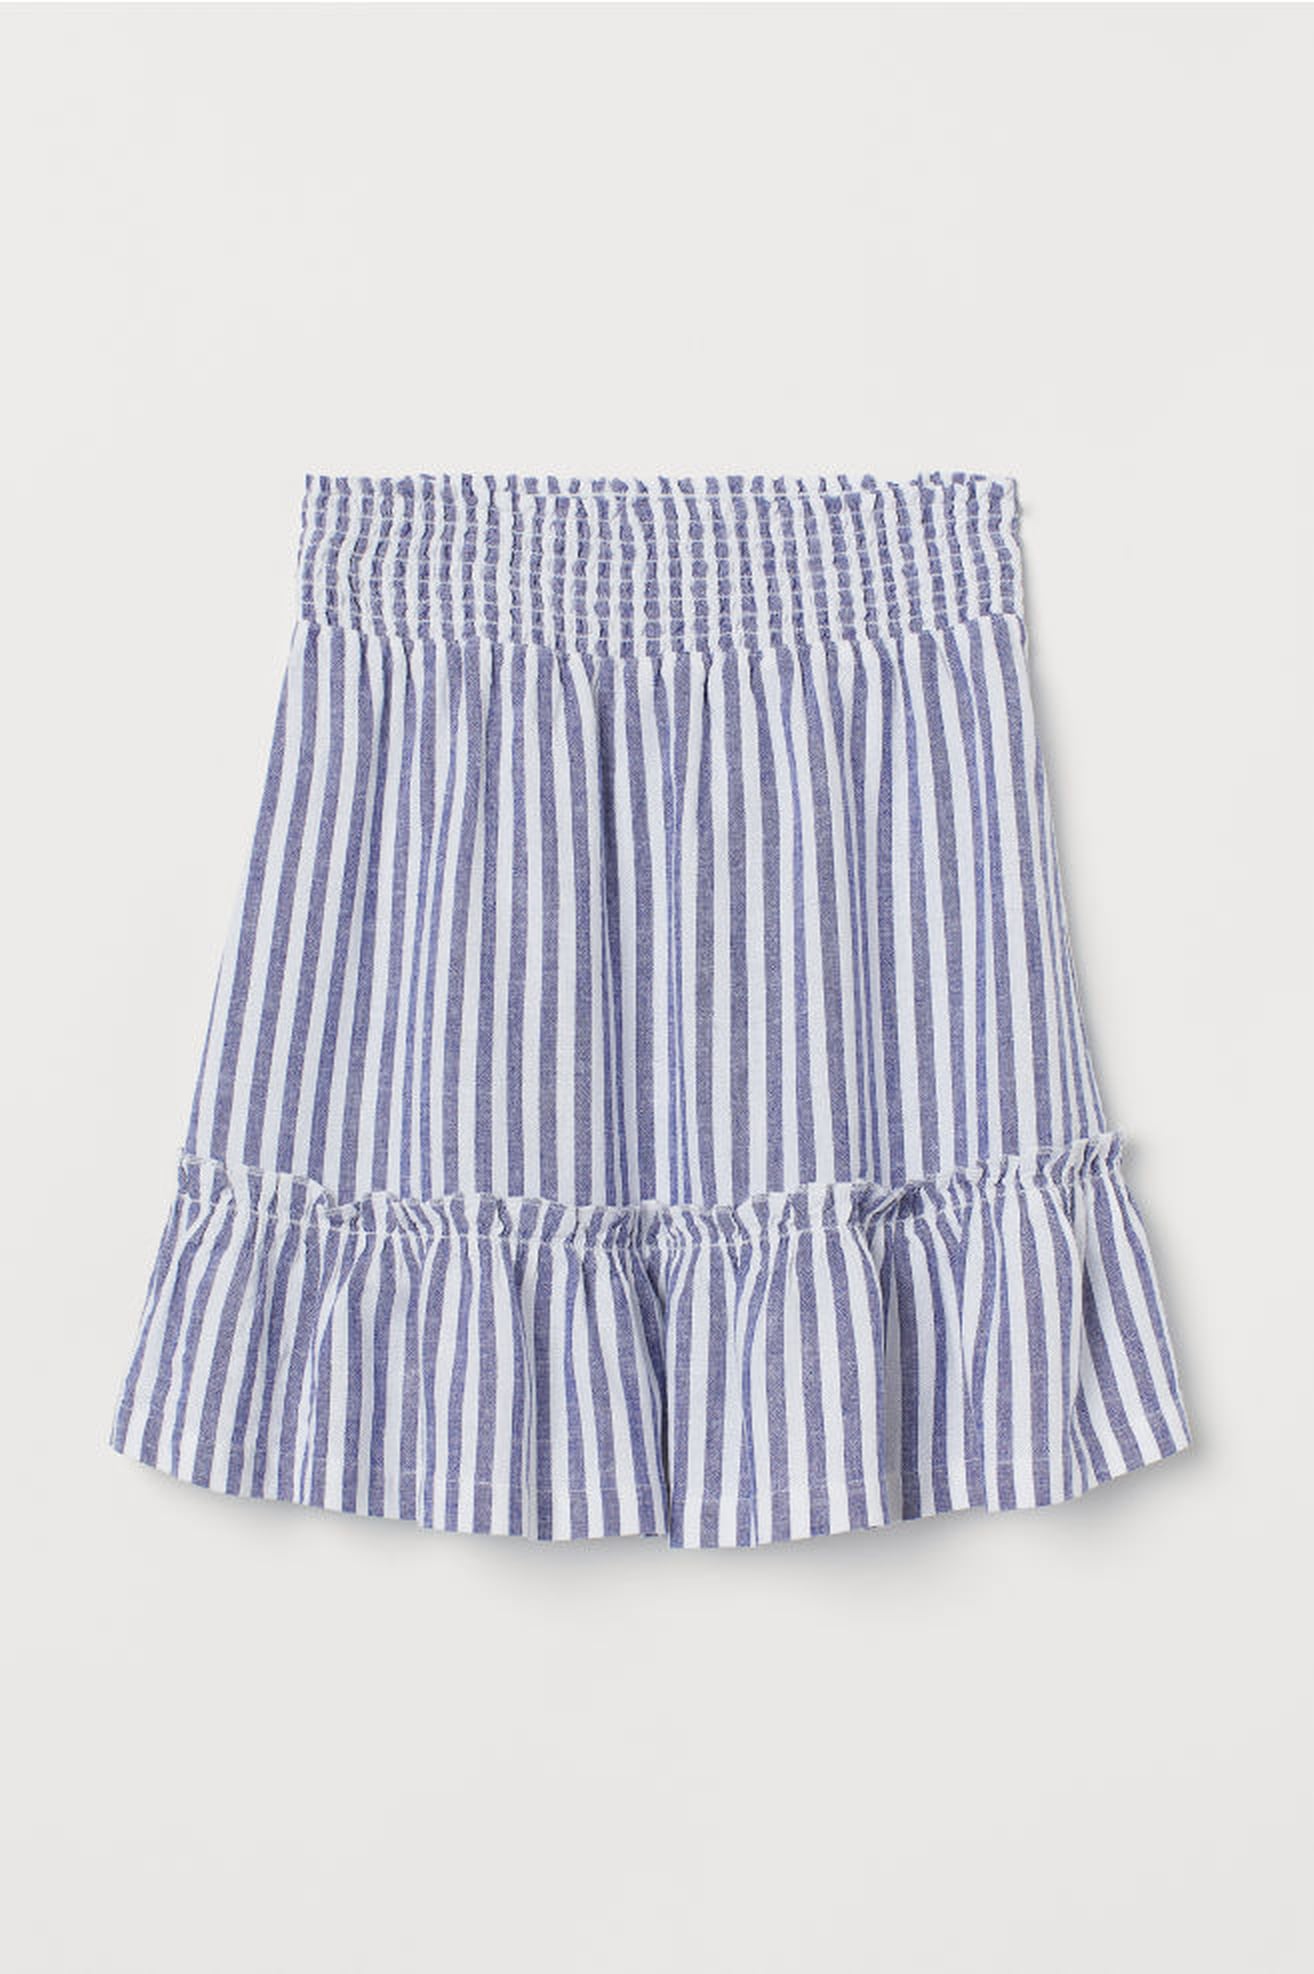 Summer Miniskirt Trend 2019 | POPSUGAR Fashion